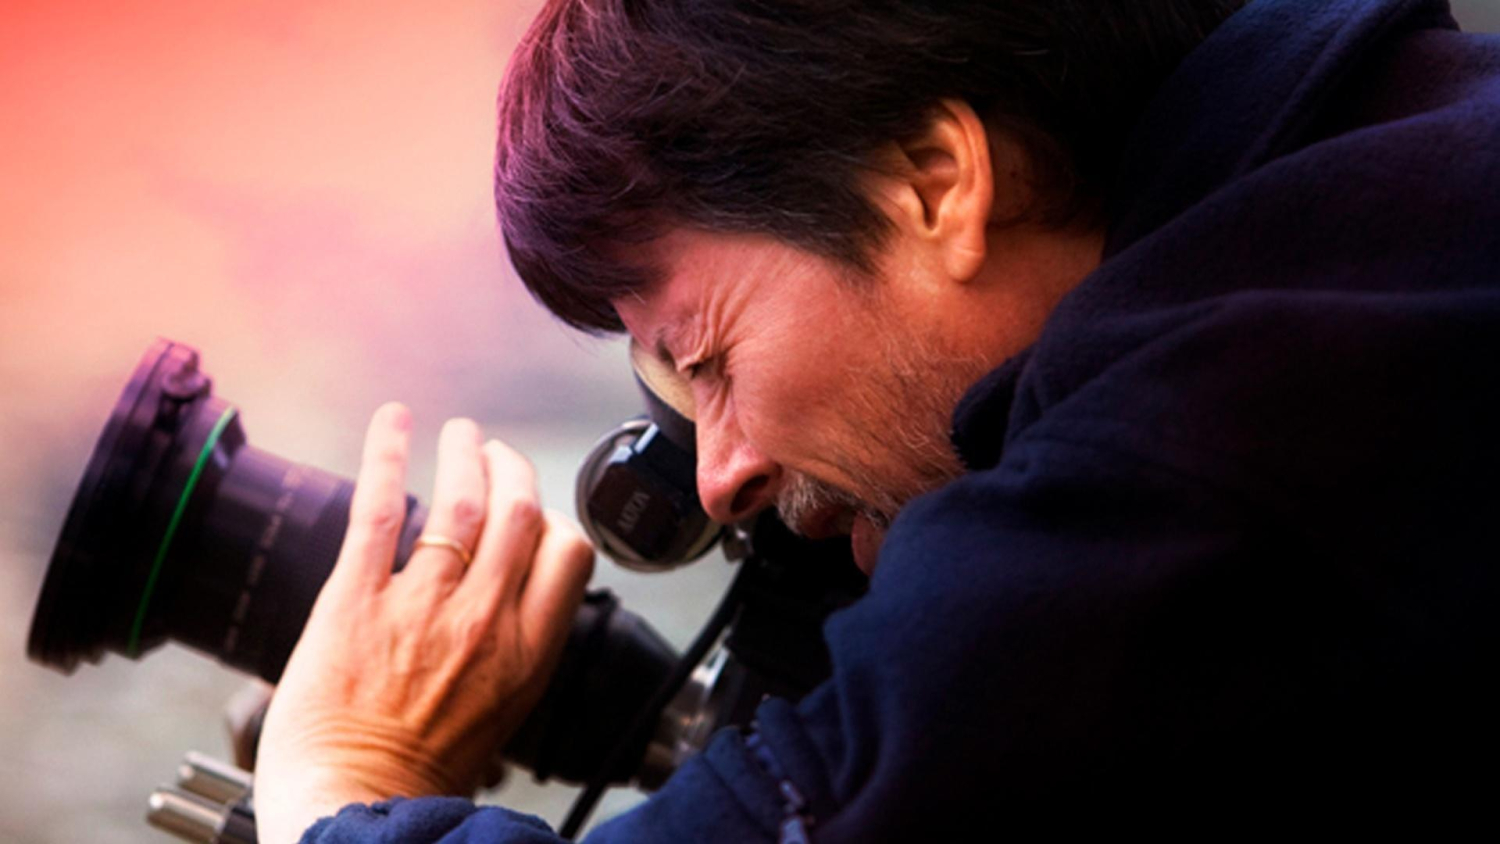 Documentary Filmaker Ken Burns operating a video camera